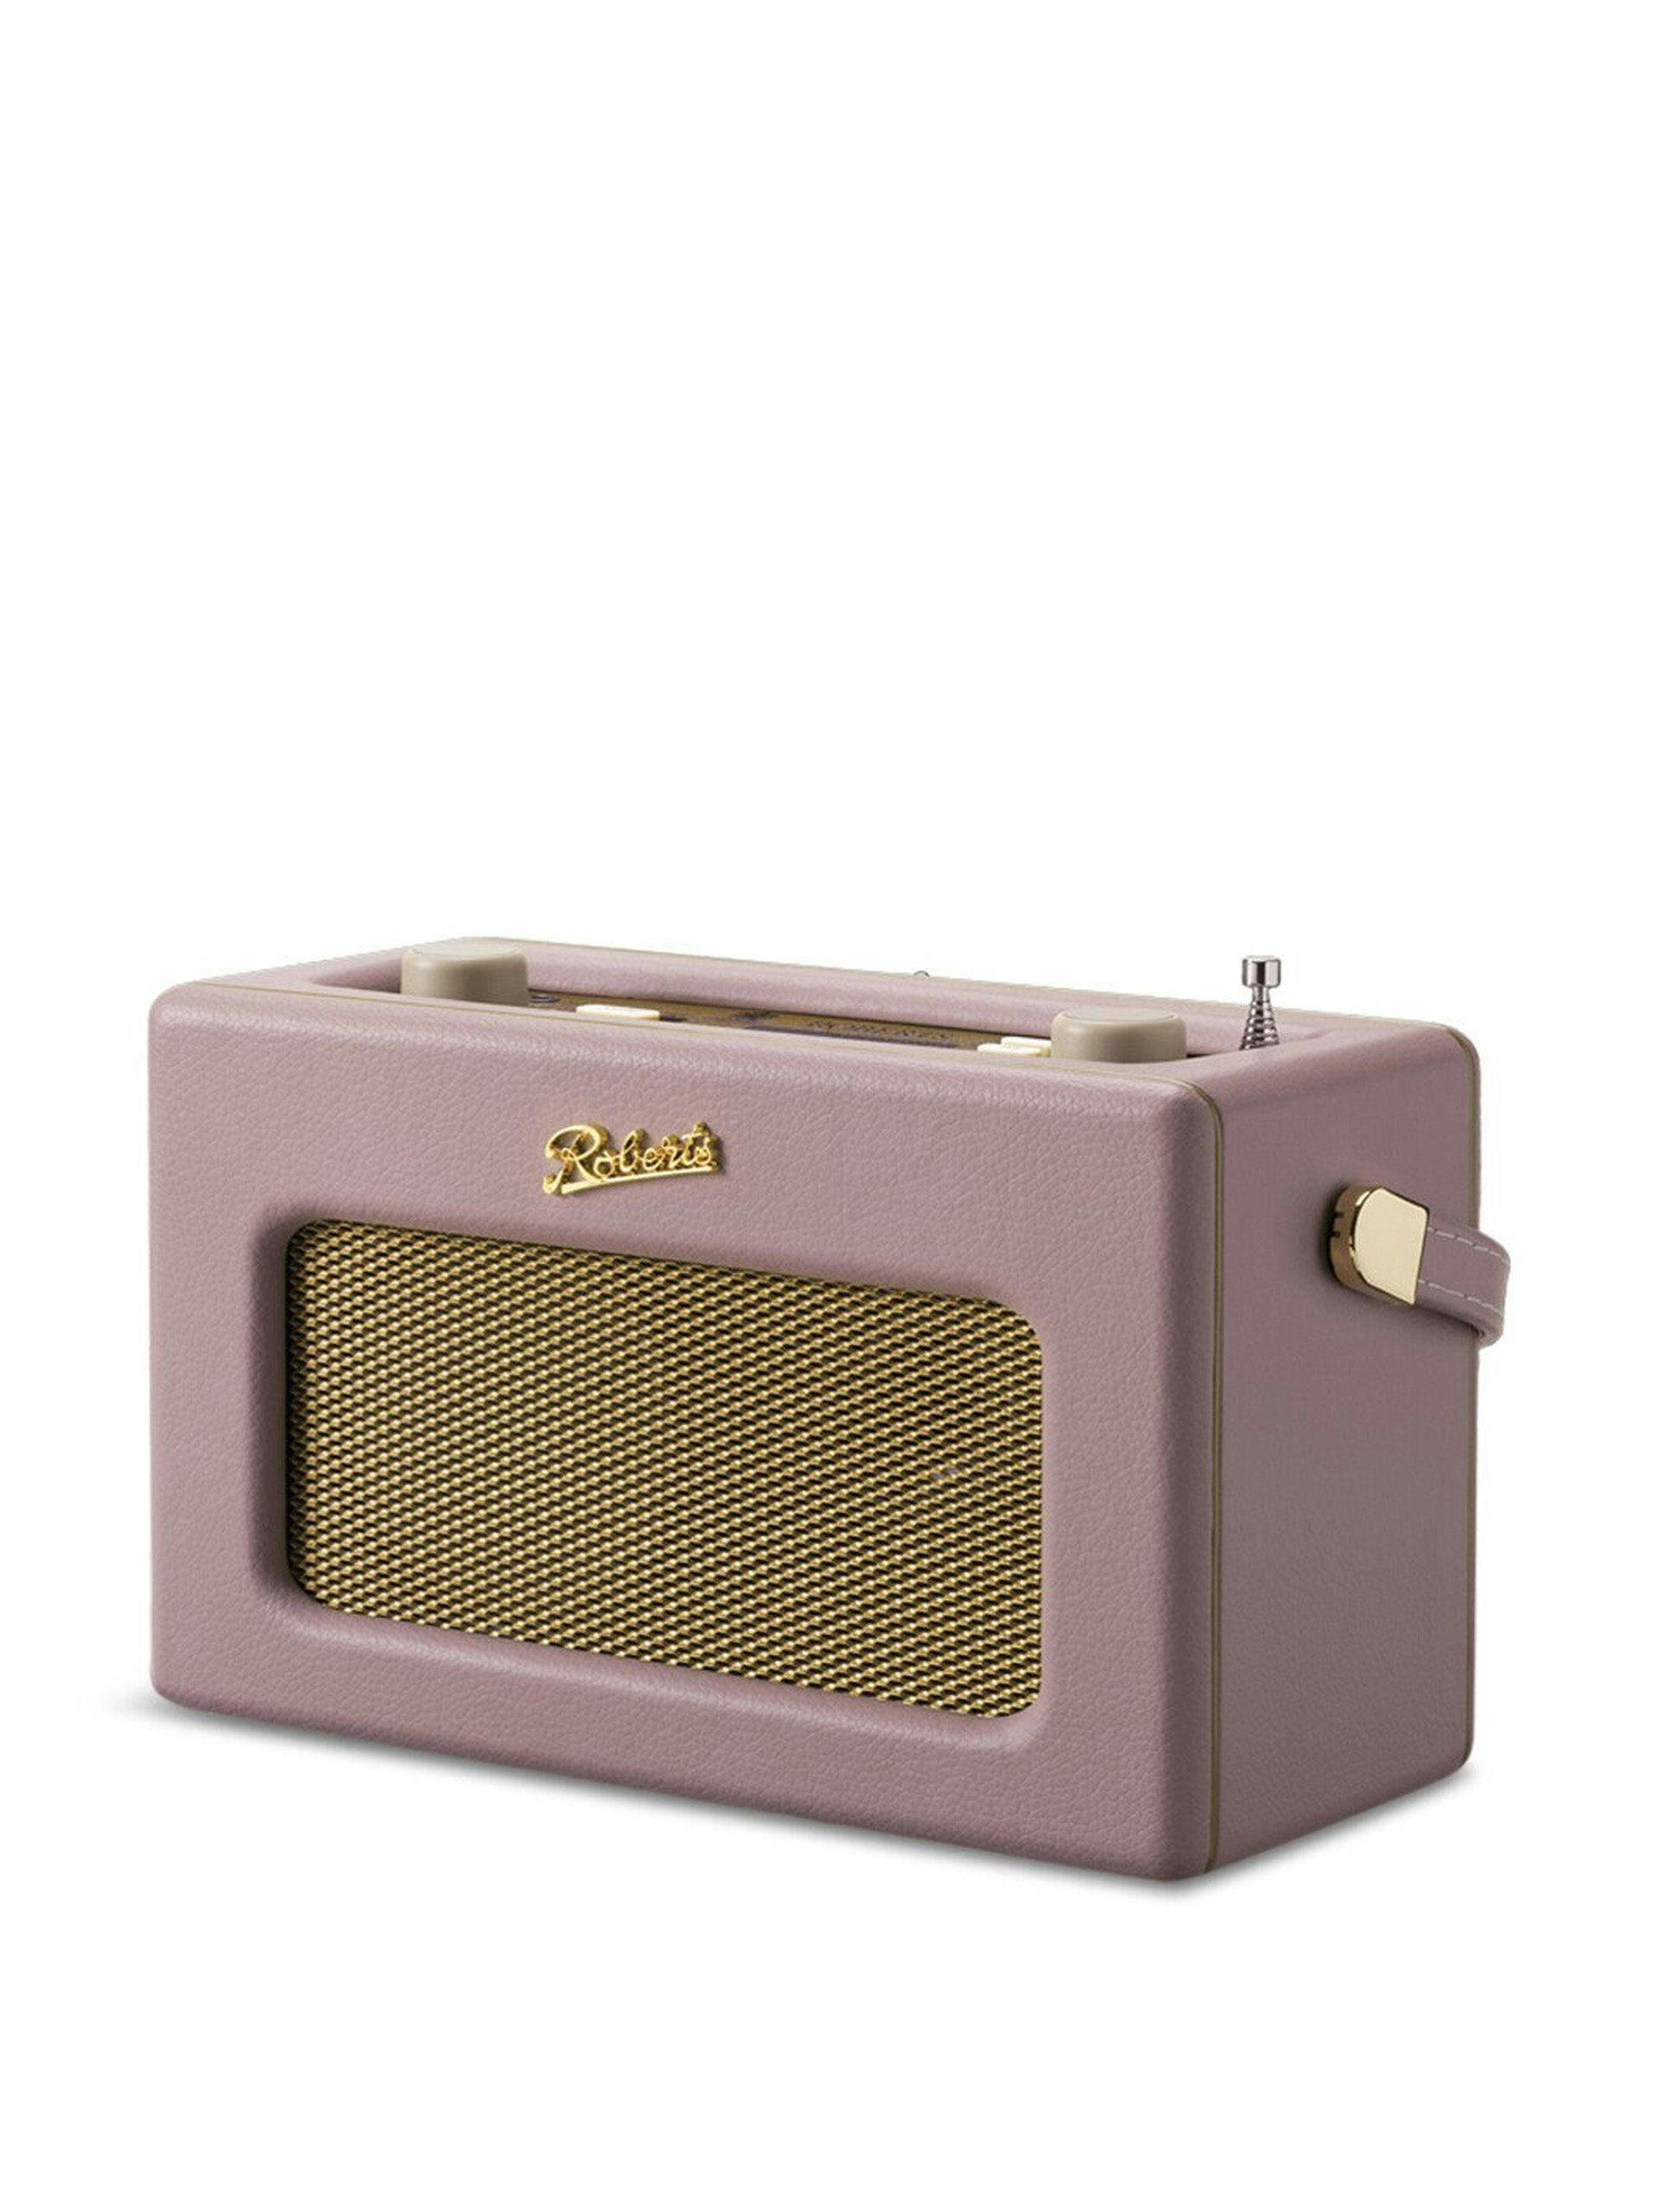 Dusky pink Bluetooth smart radio